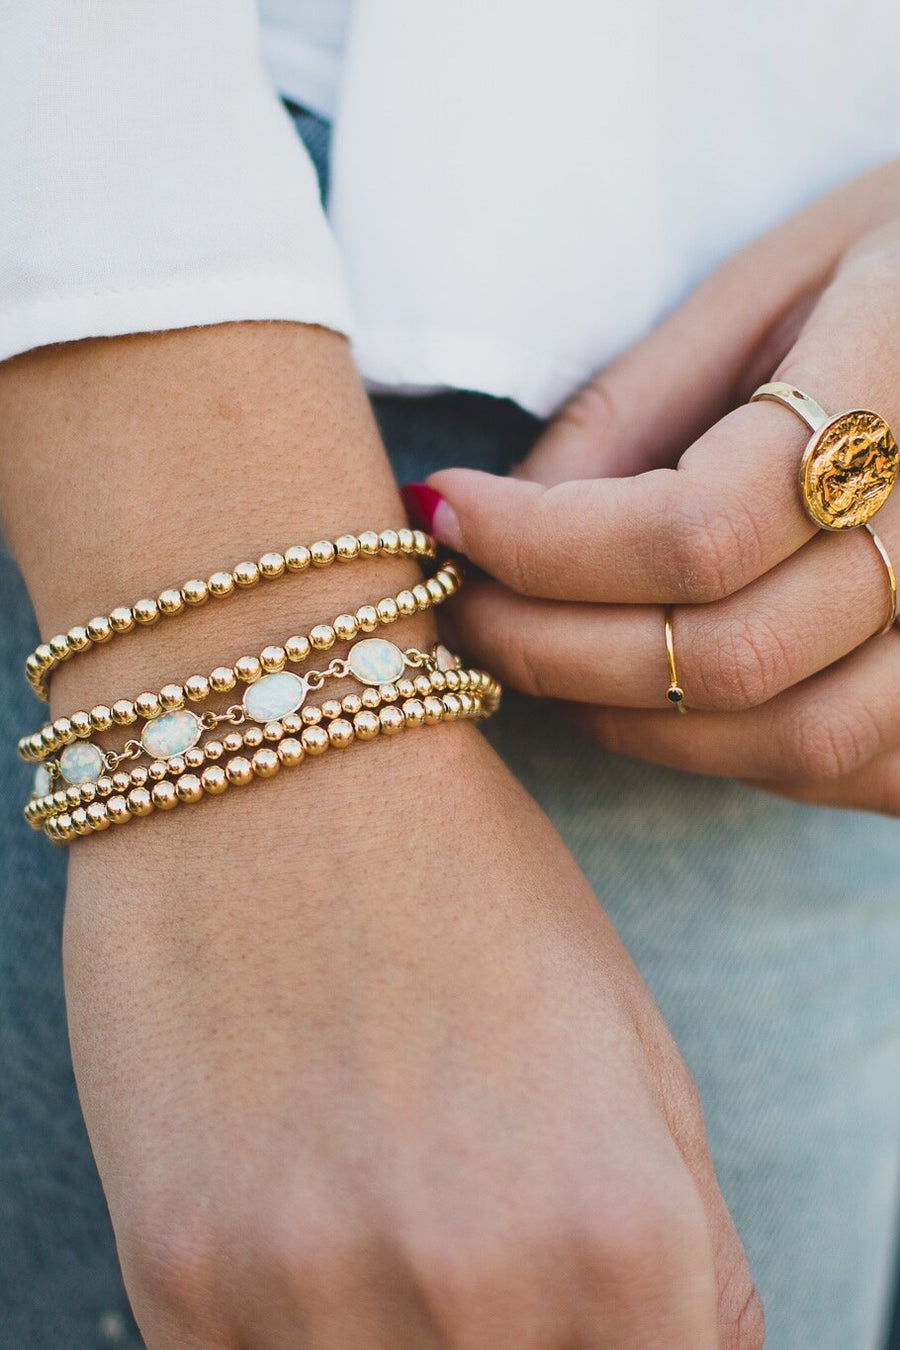 Pandora Gift Set Ring and Bracelet | eBay